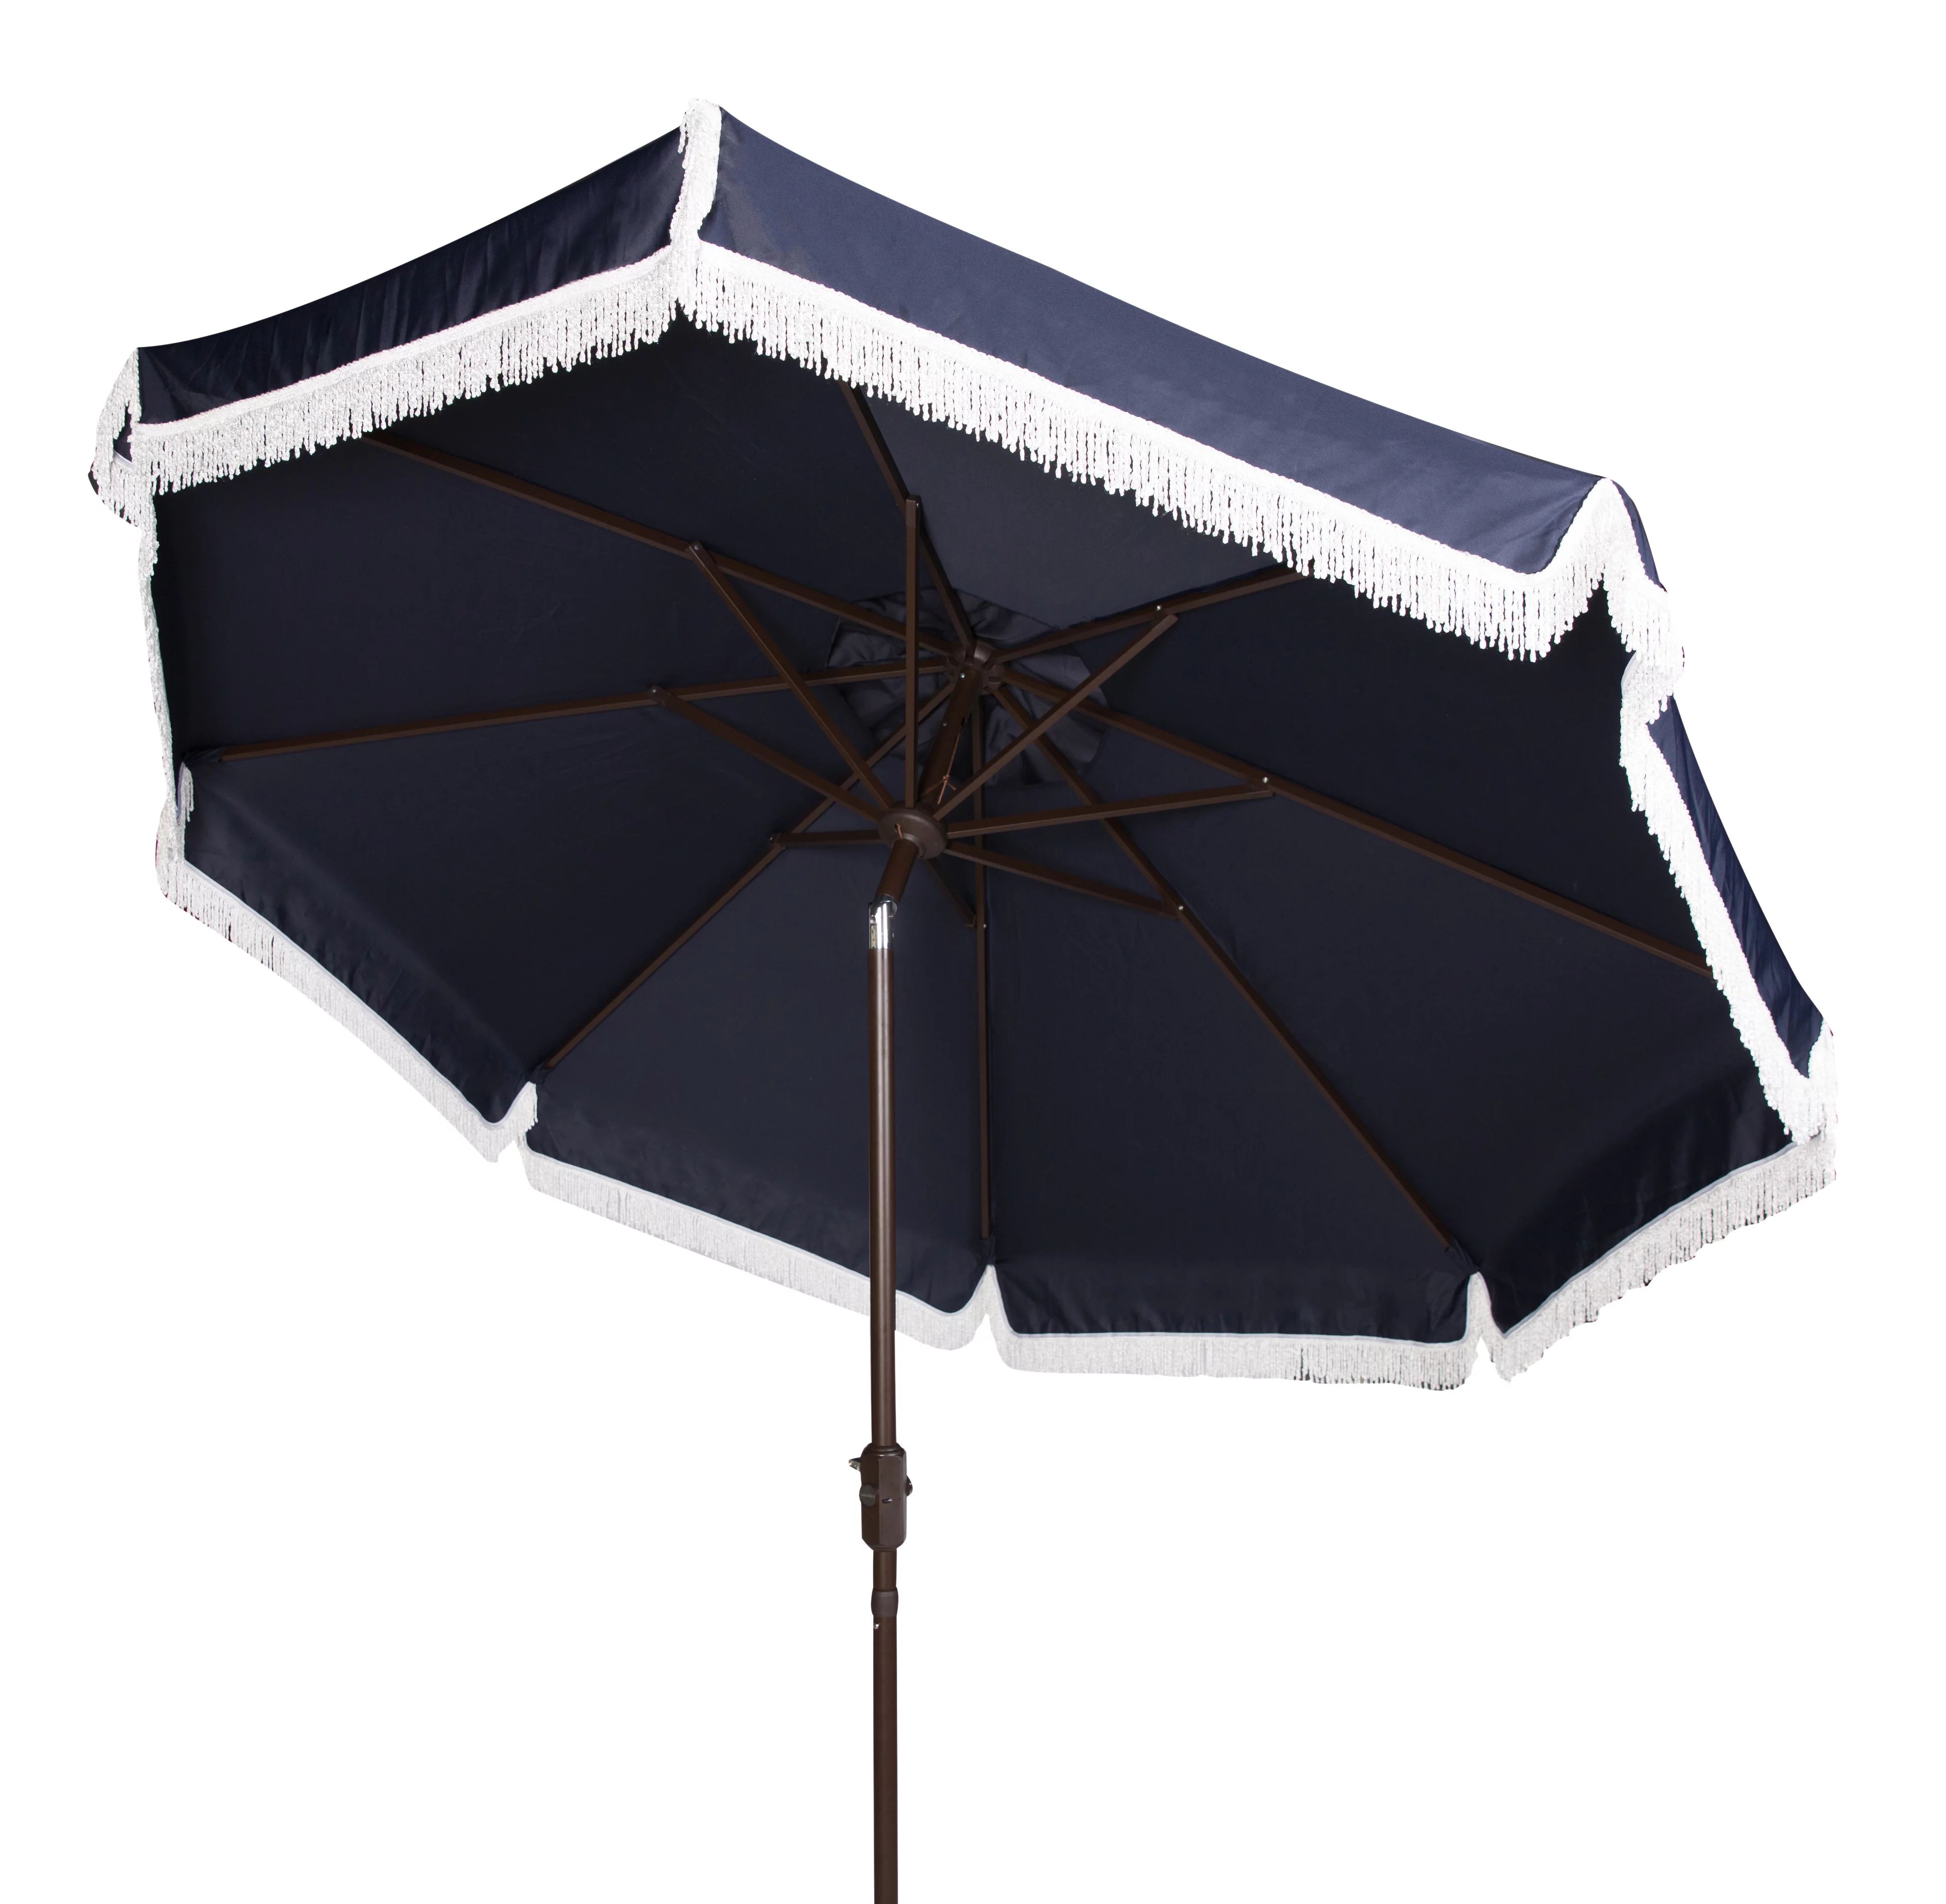 Safavieh Milan 9' Market Crank Fringe Tilt Patio Umbrella, White | Walmart (US)